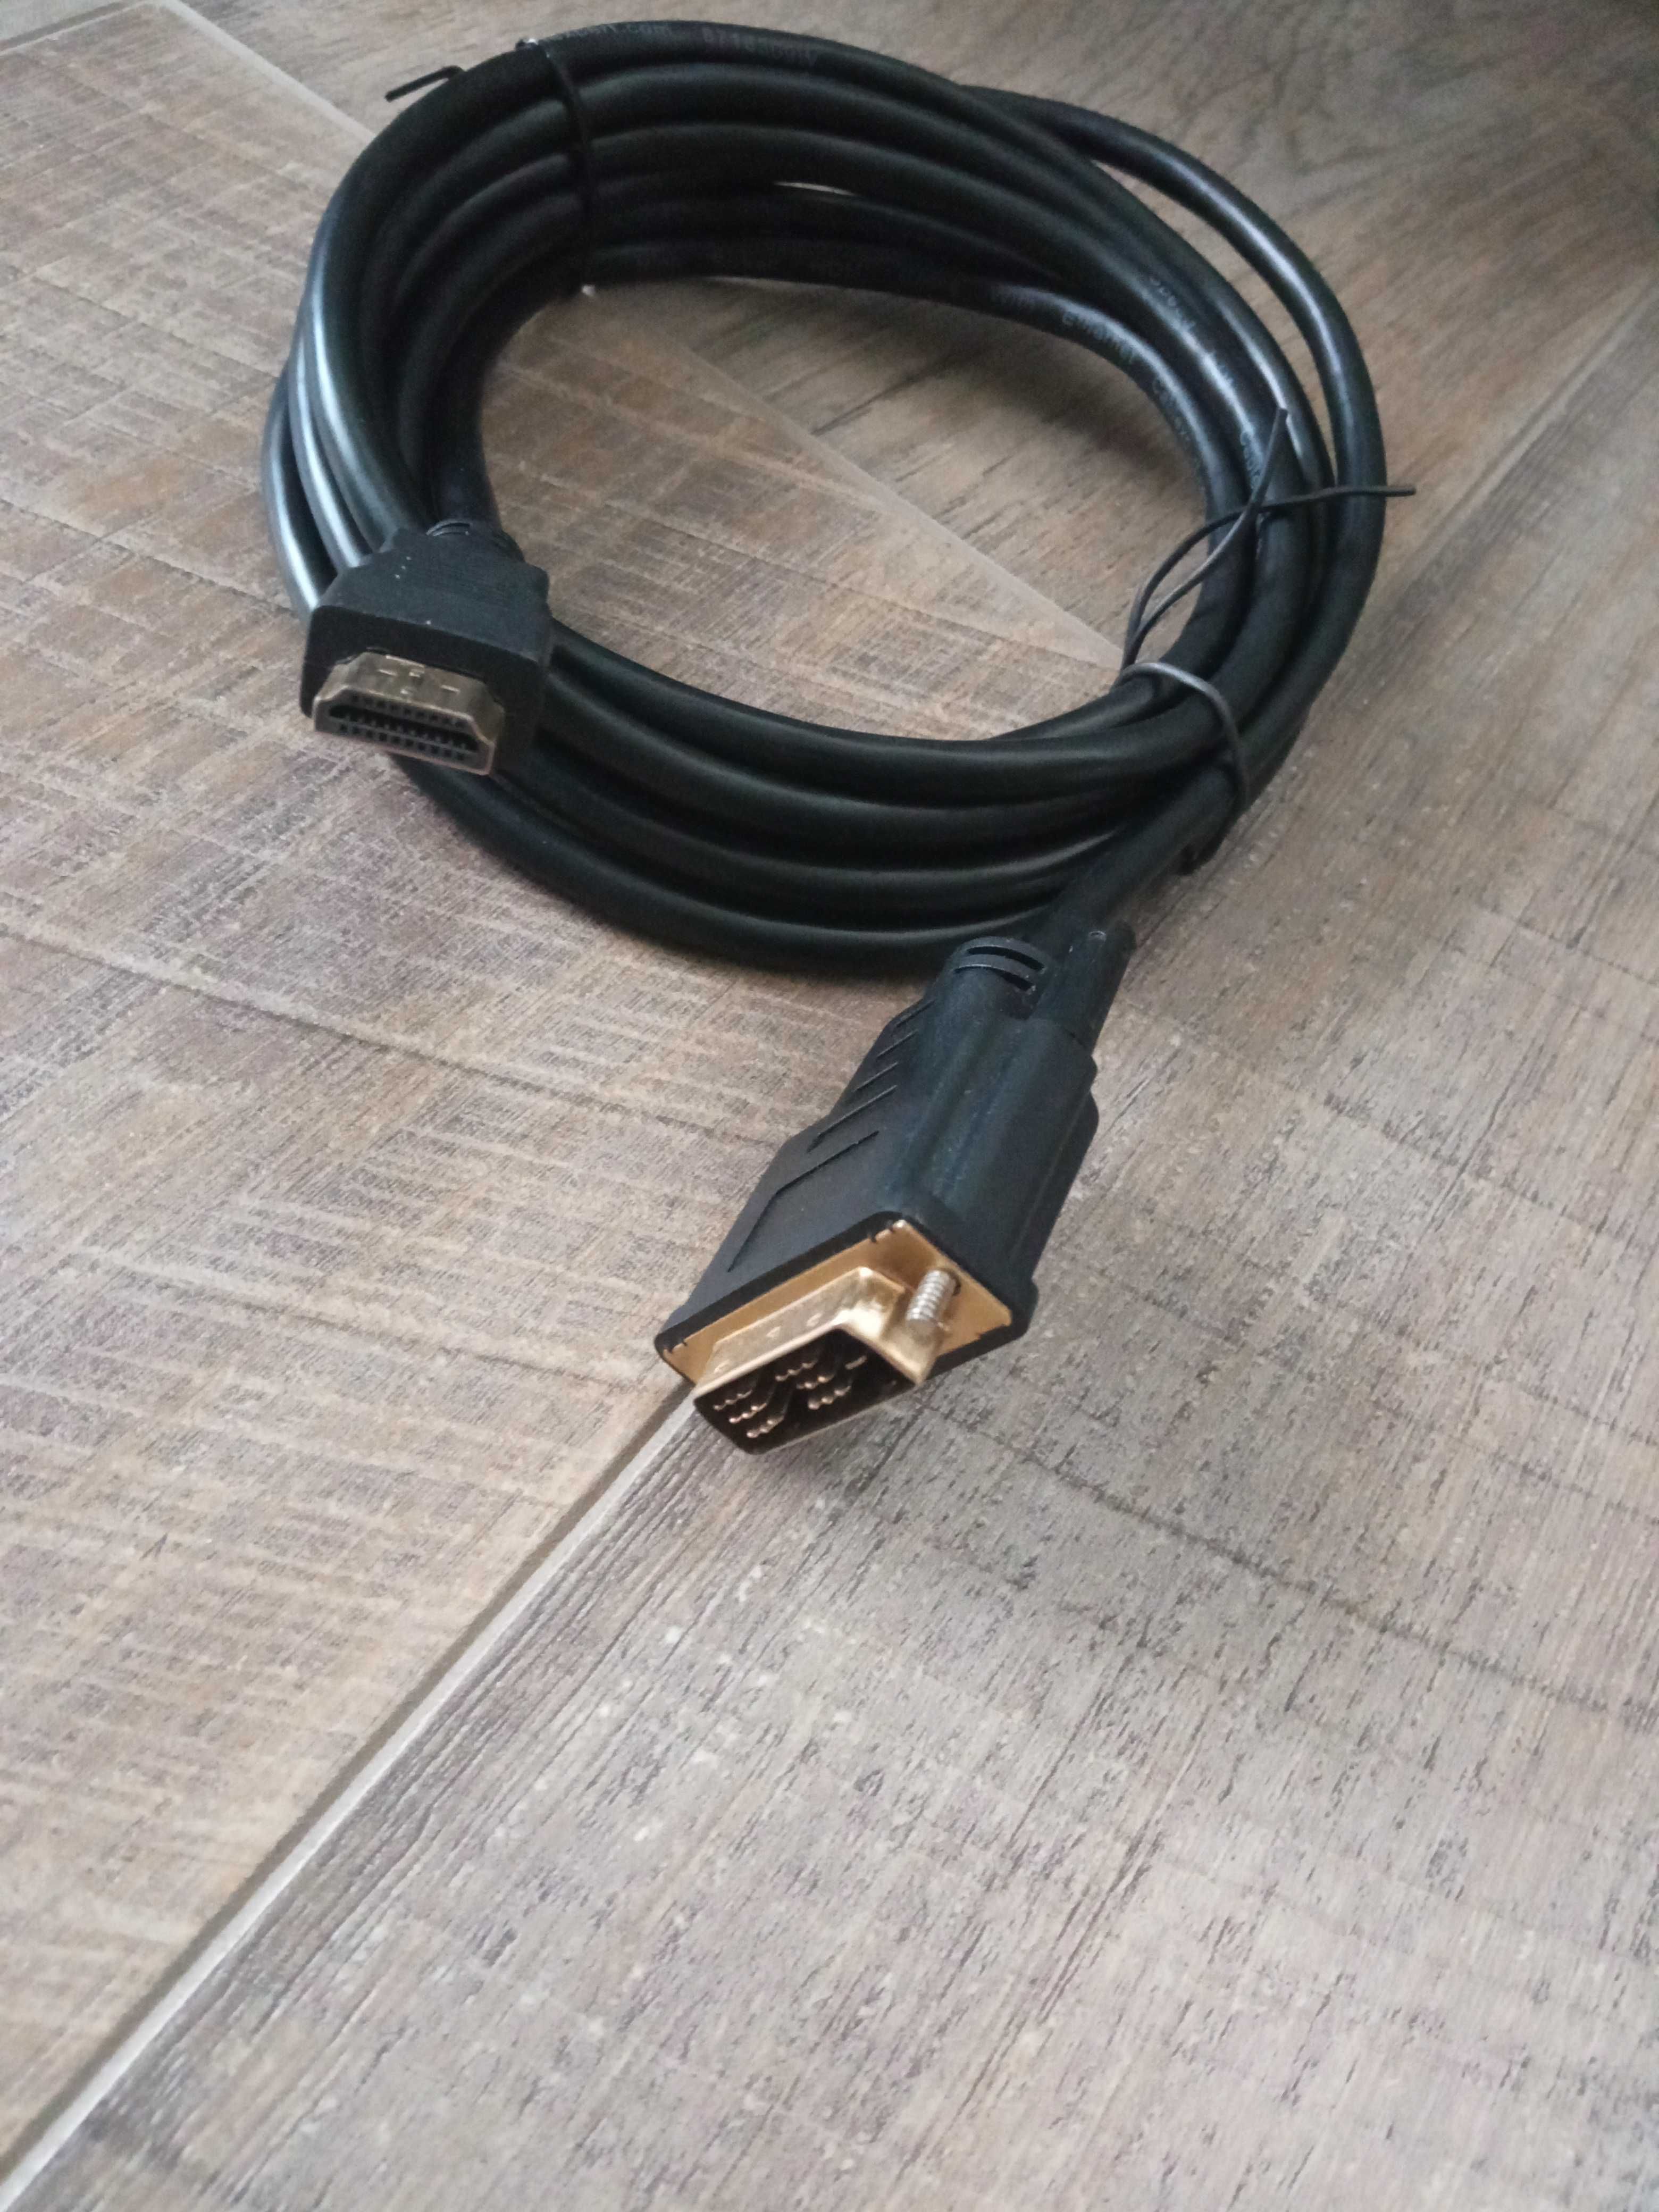 Кабель HDMI to DVI